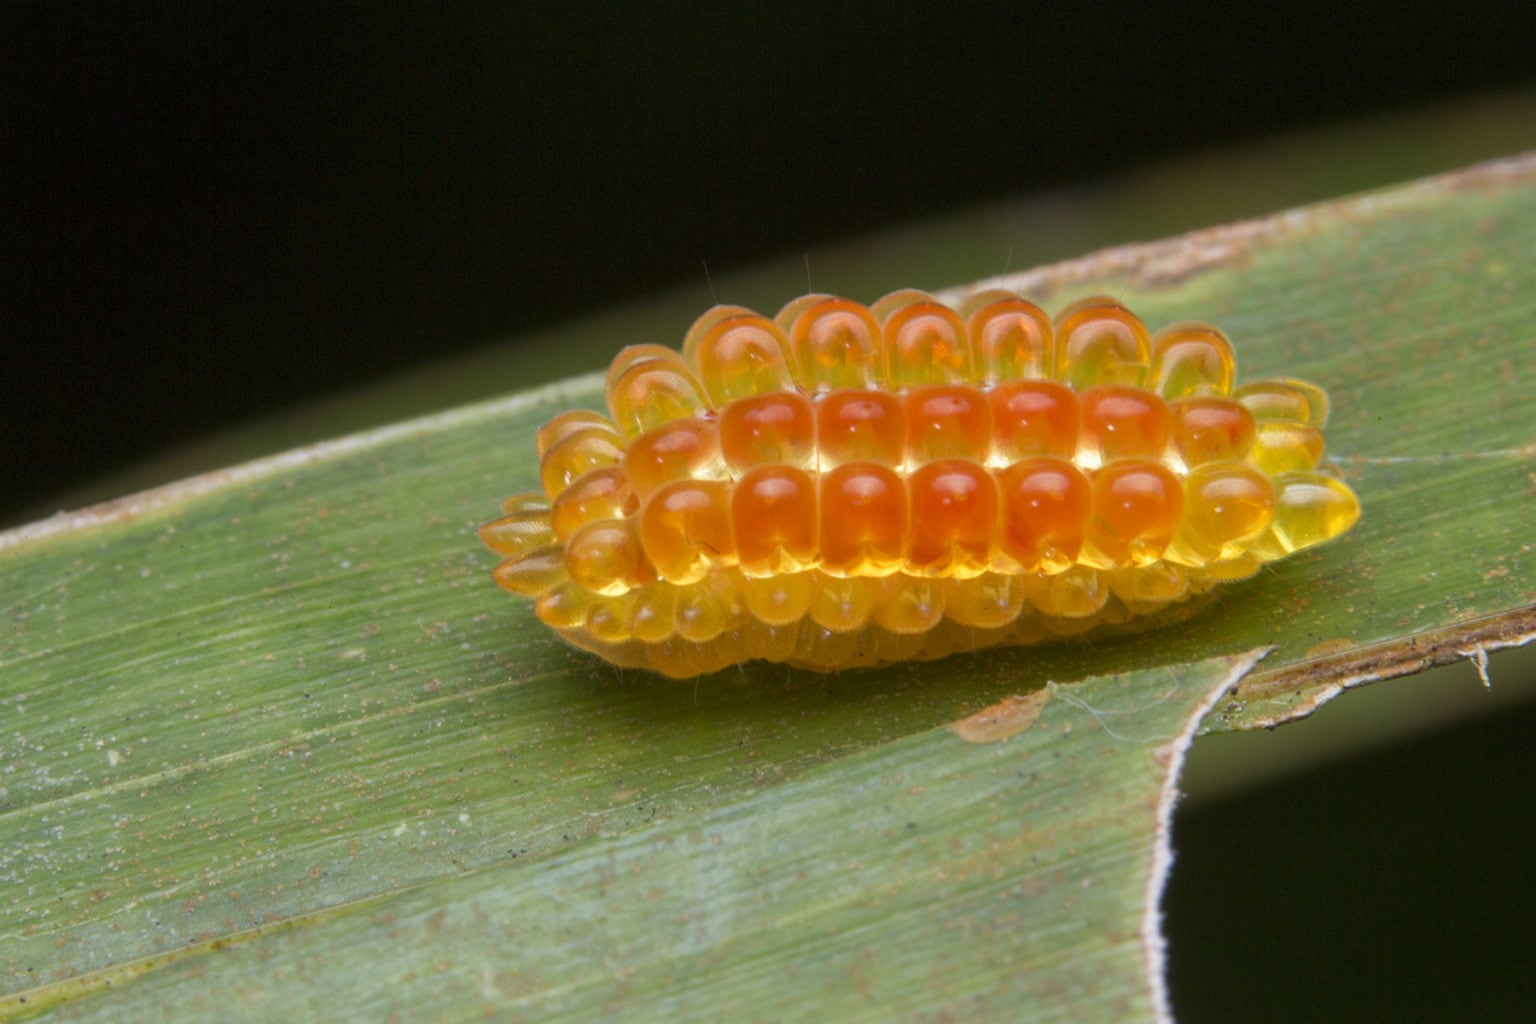 jelly-caterpillar-1536x1024.jpg